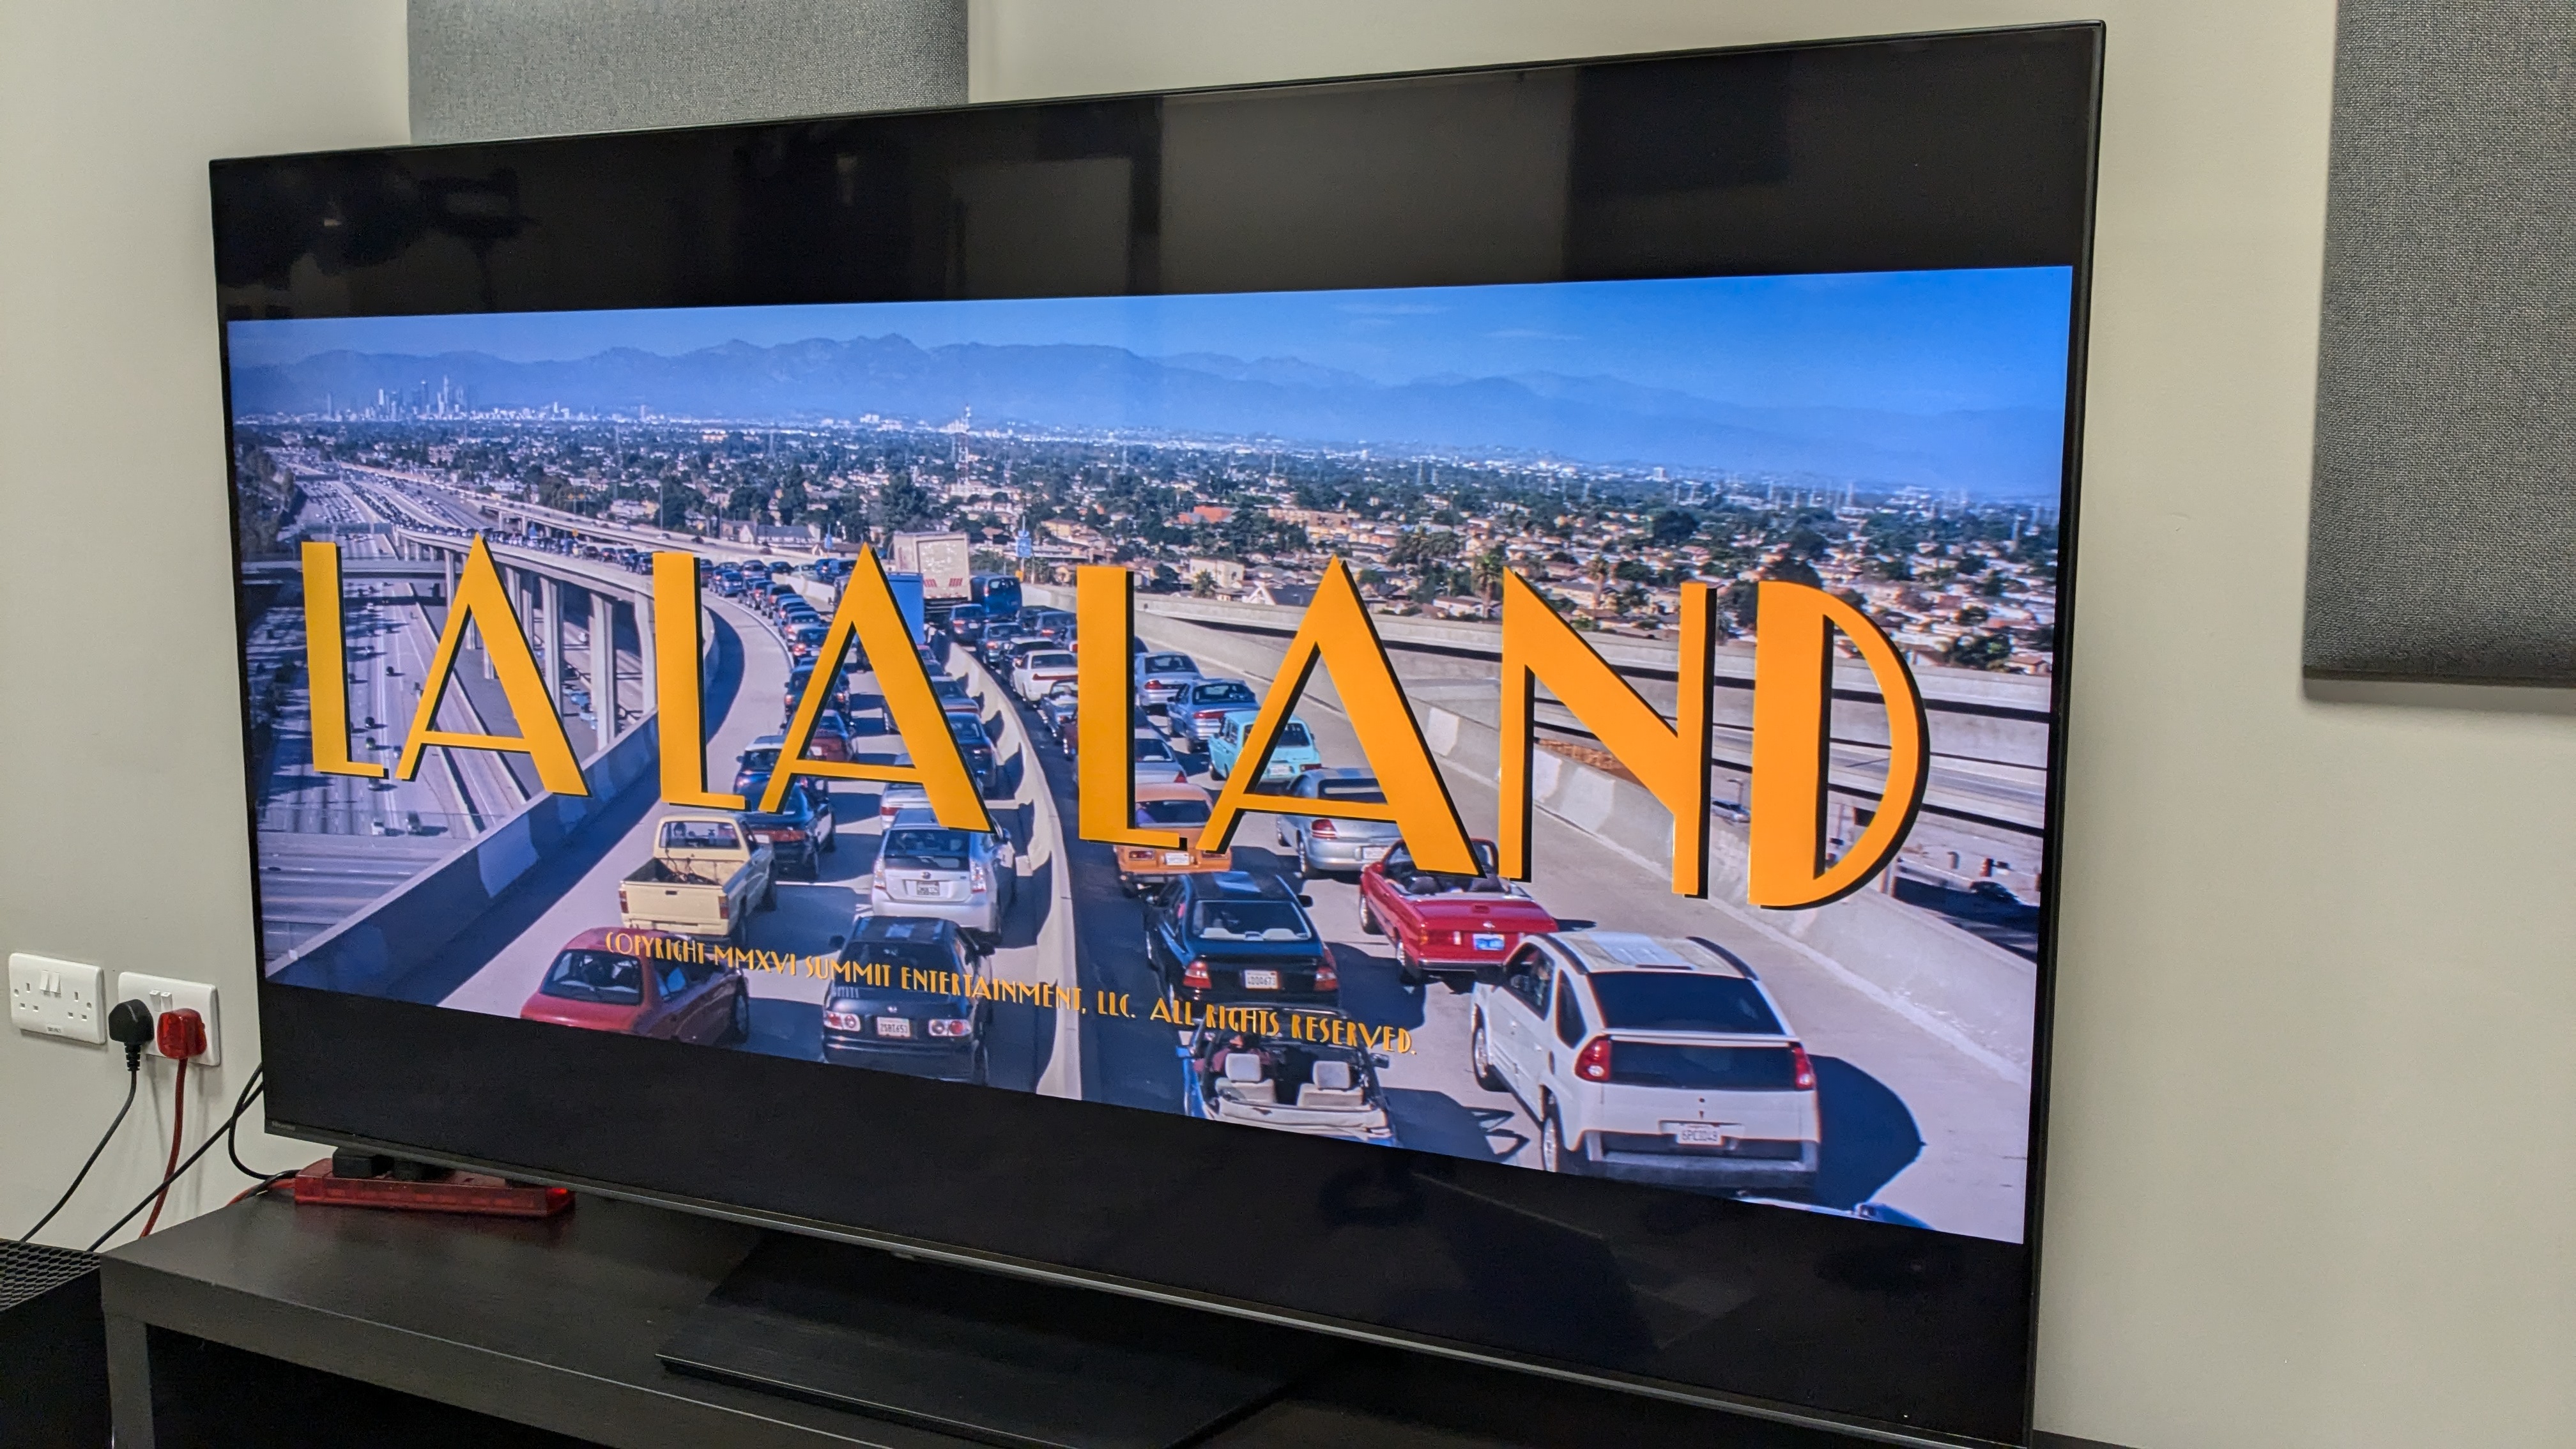 Hisense U7N with La La Land on screen